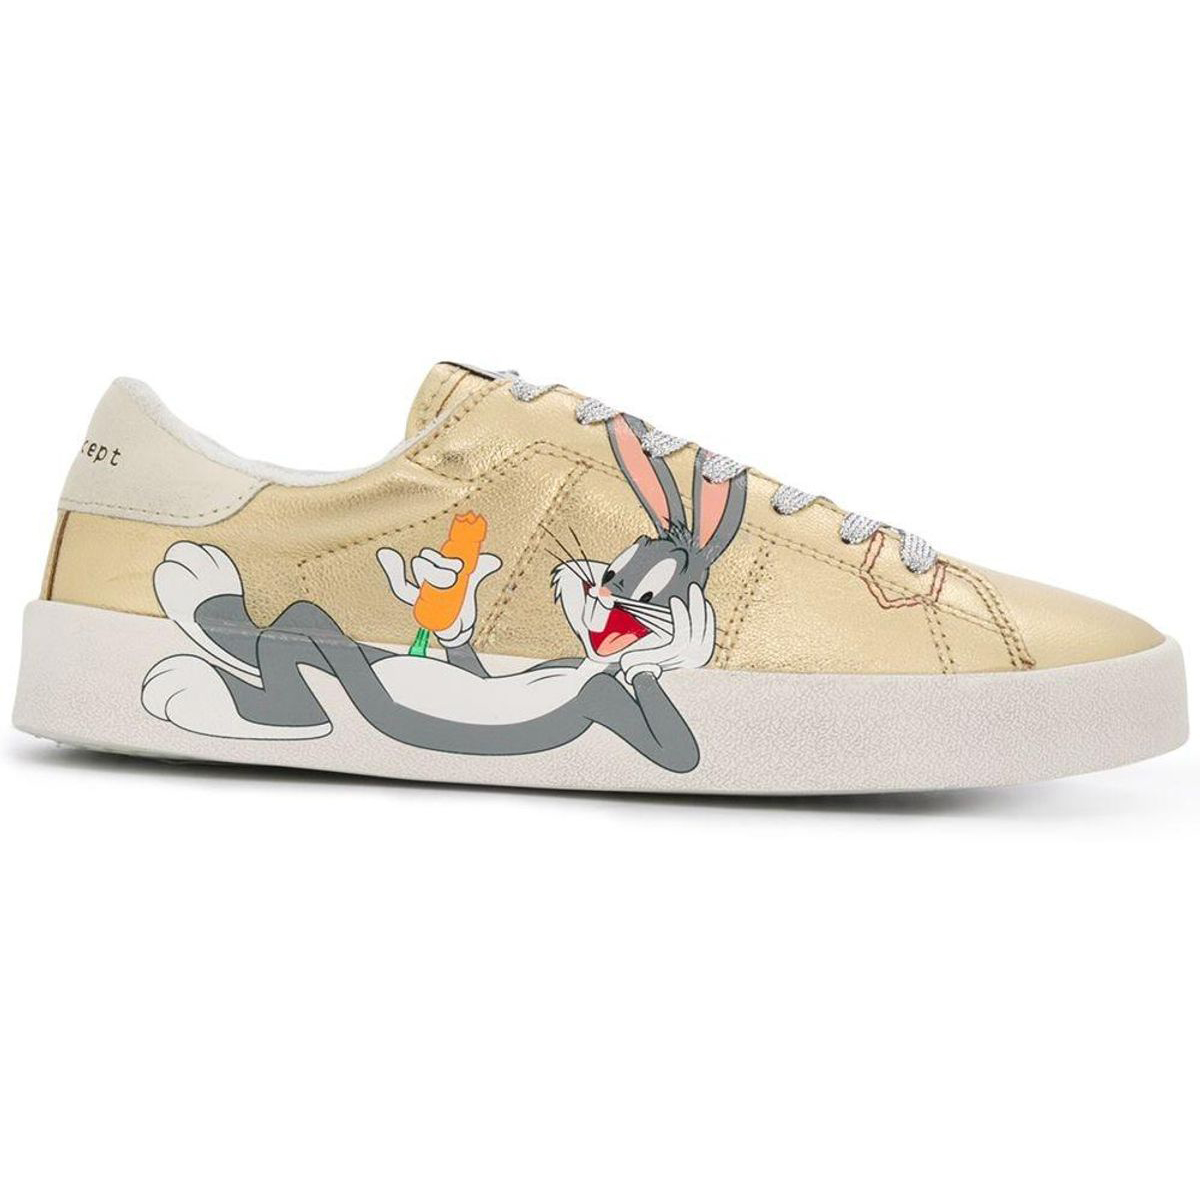 Sneaker doré bunny (réf. 383701) : 185€